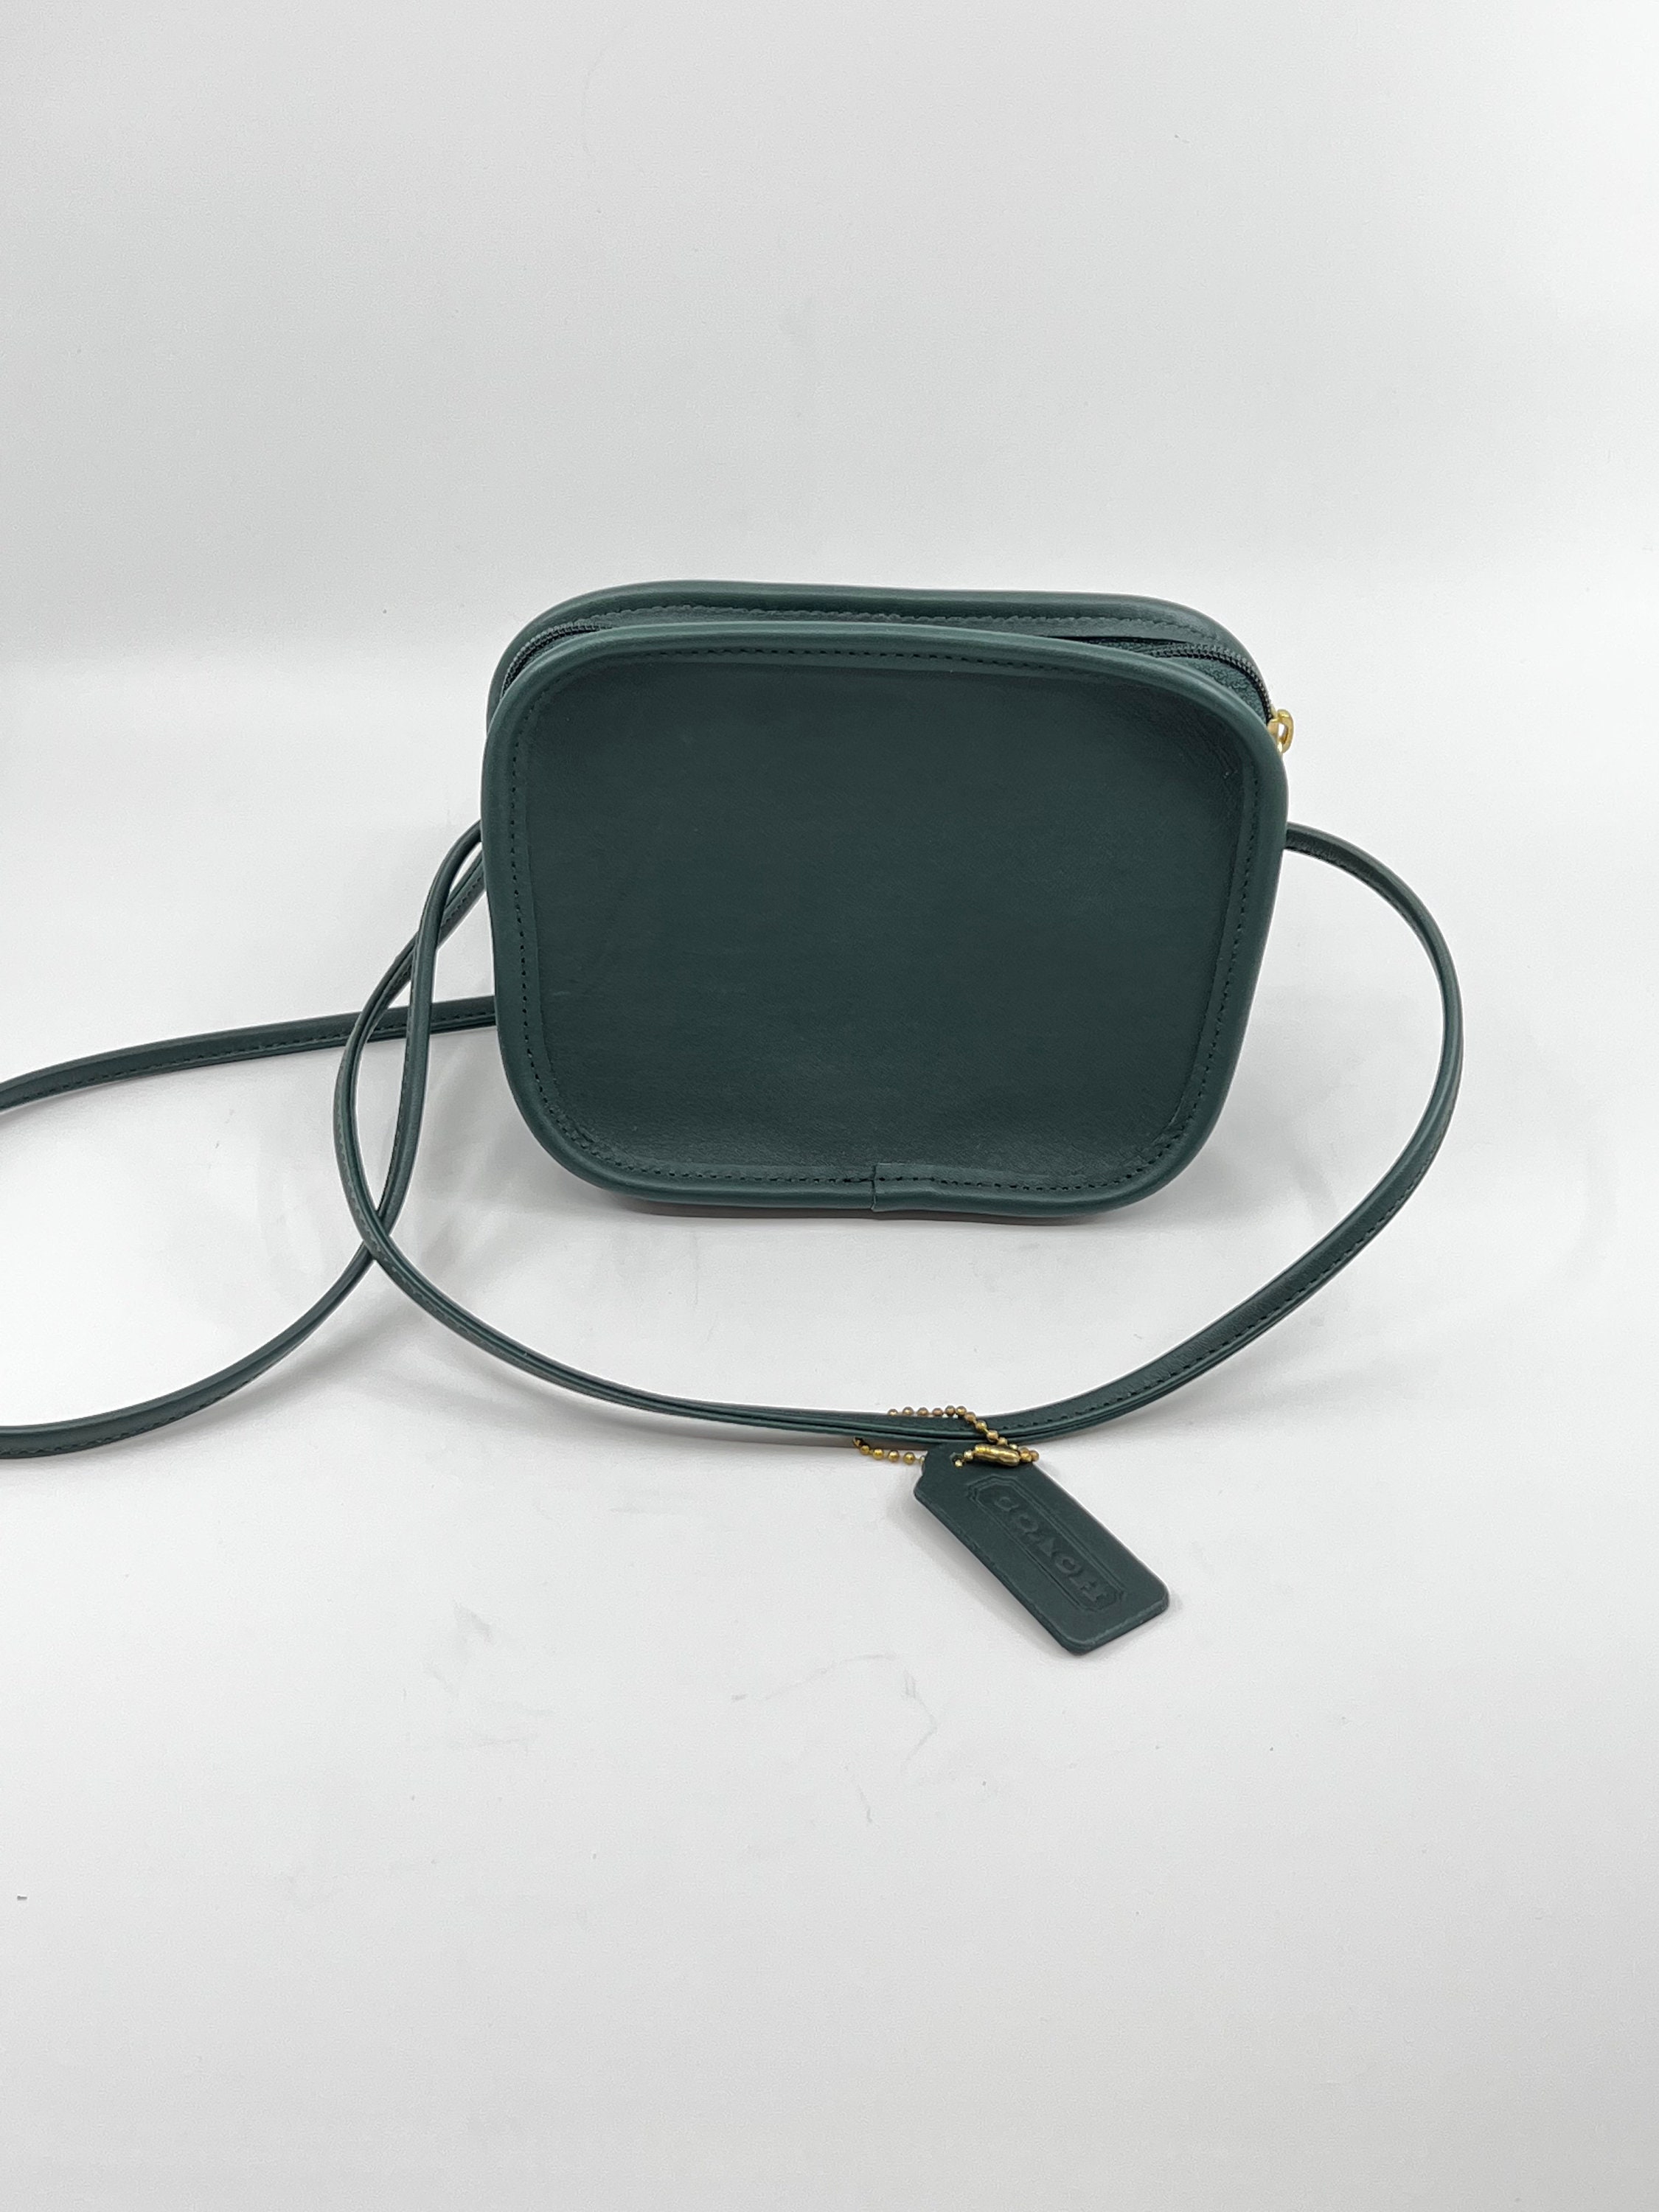 1990s Black Coach Hadley Bag, 9935 - Vintage Leather Small Classic Handbag: Crossbody Shoulder Strap, Small Preppy Purse